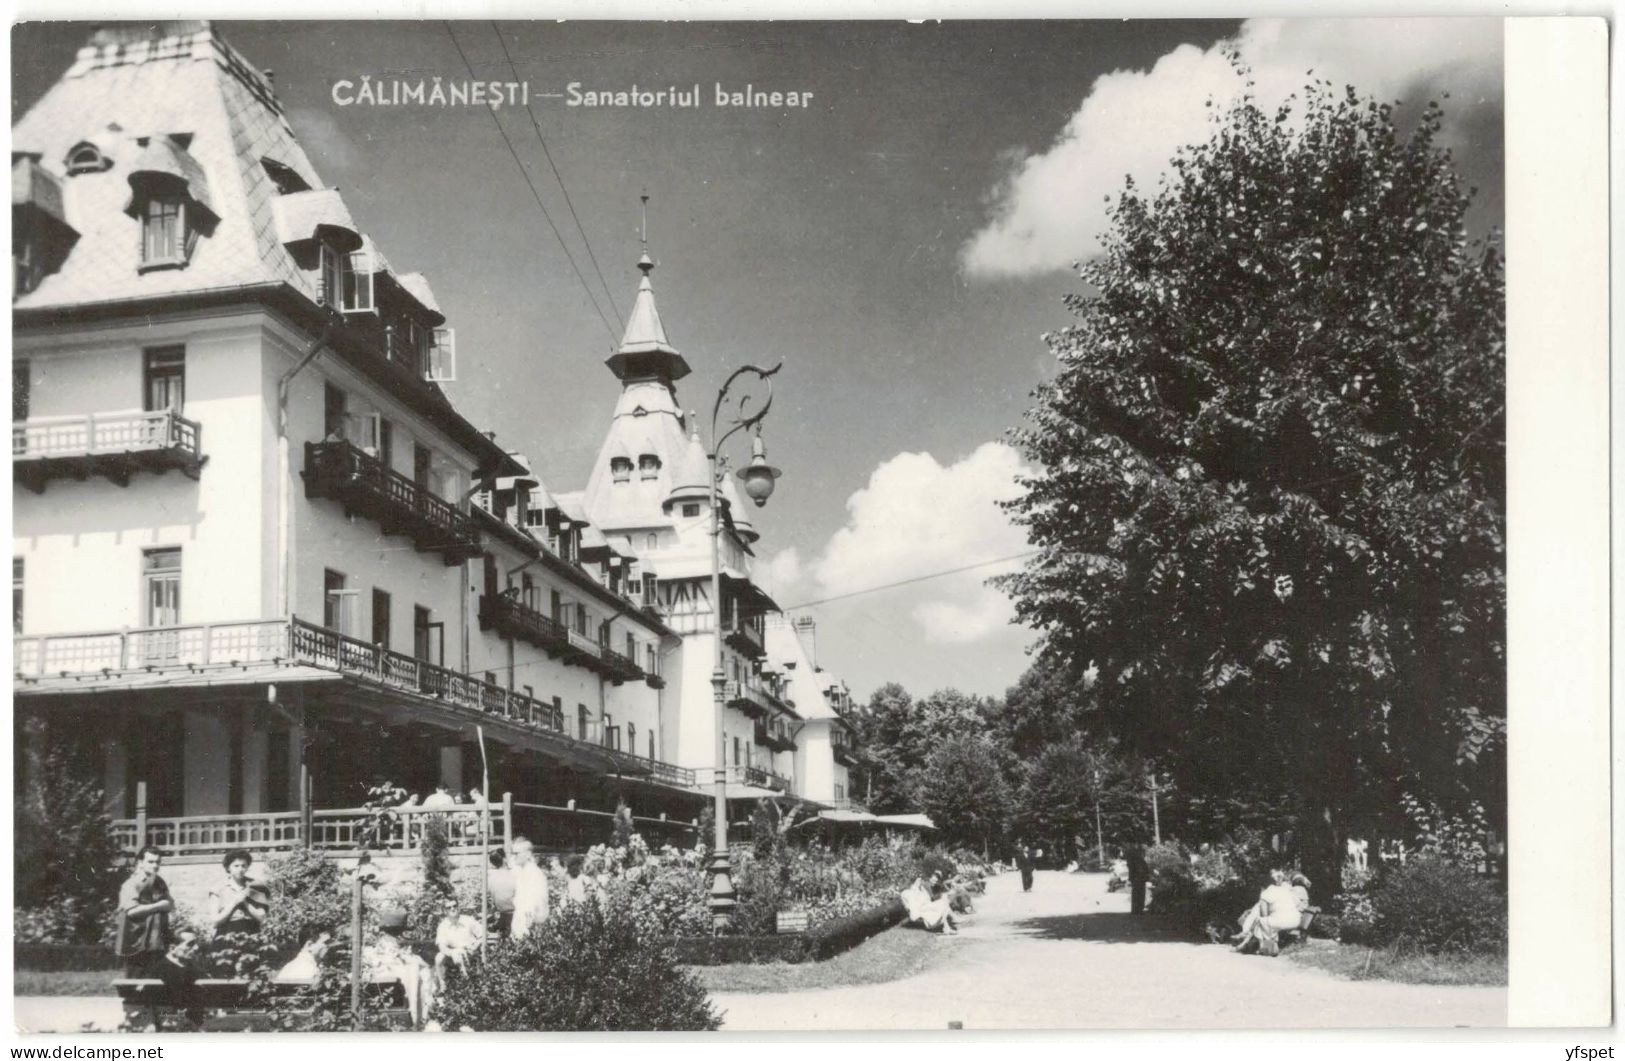 Călimănești Health Resort - Sanatorium - Roumanie